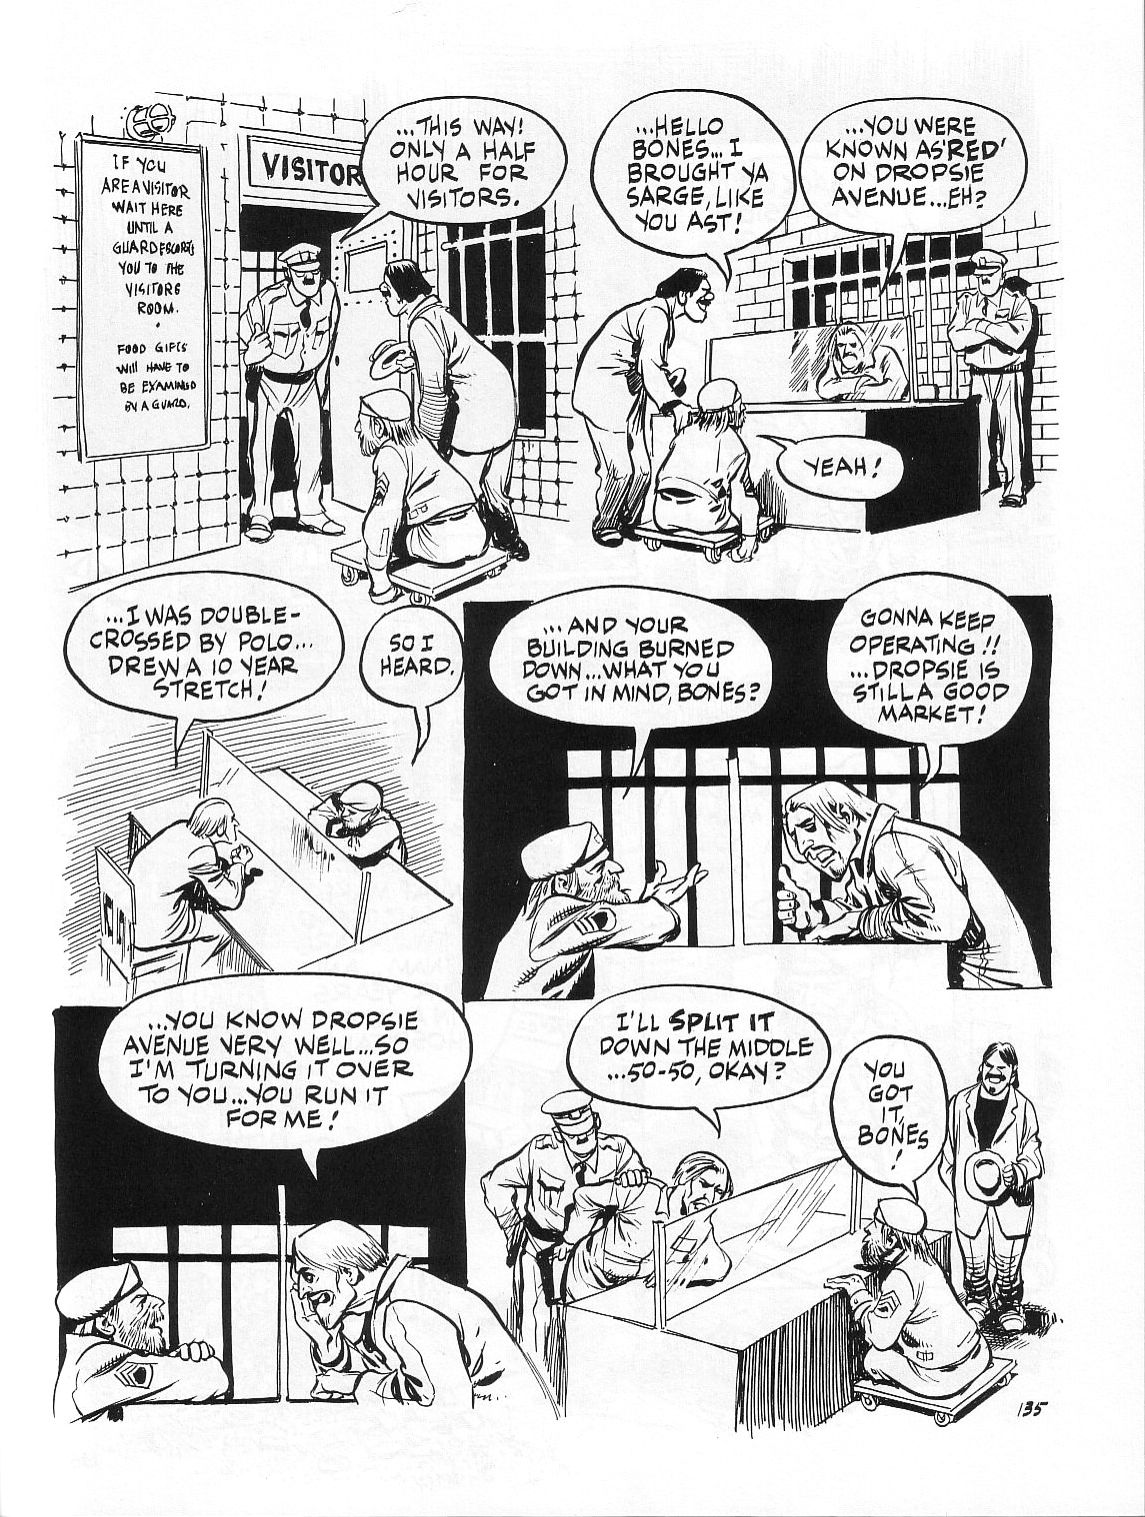 Read online Dropsie Avenue, The Neighborhood comic -  Issue # Full - 137